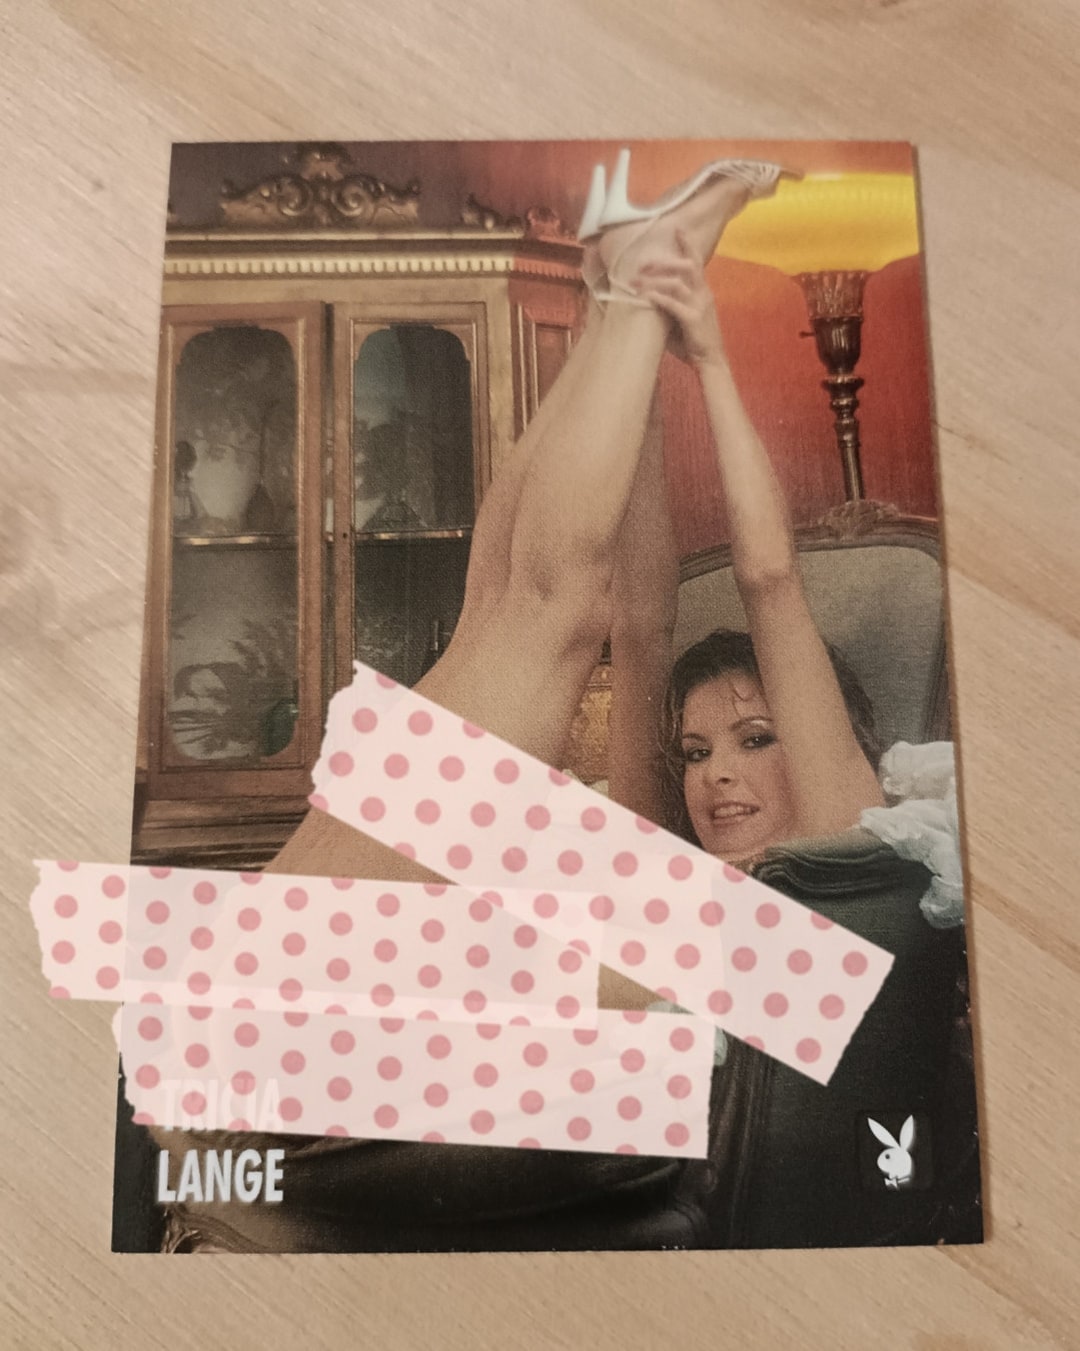 Tricia Lange Card N 92 Playboy Miss June June 1984 Trading Card 1996  6.4x8.9 Cm - Etsy